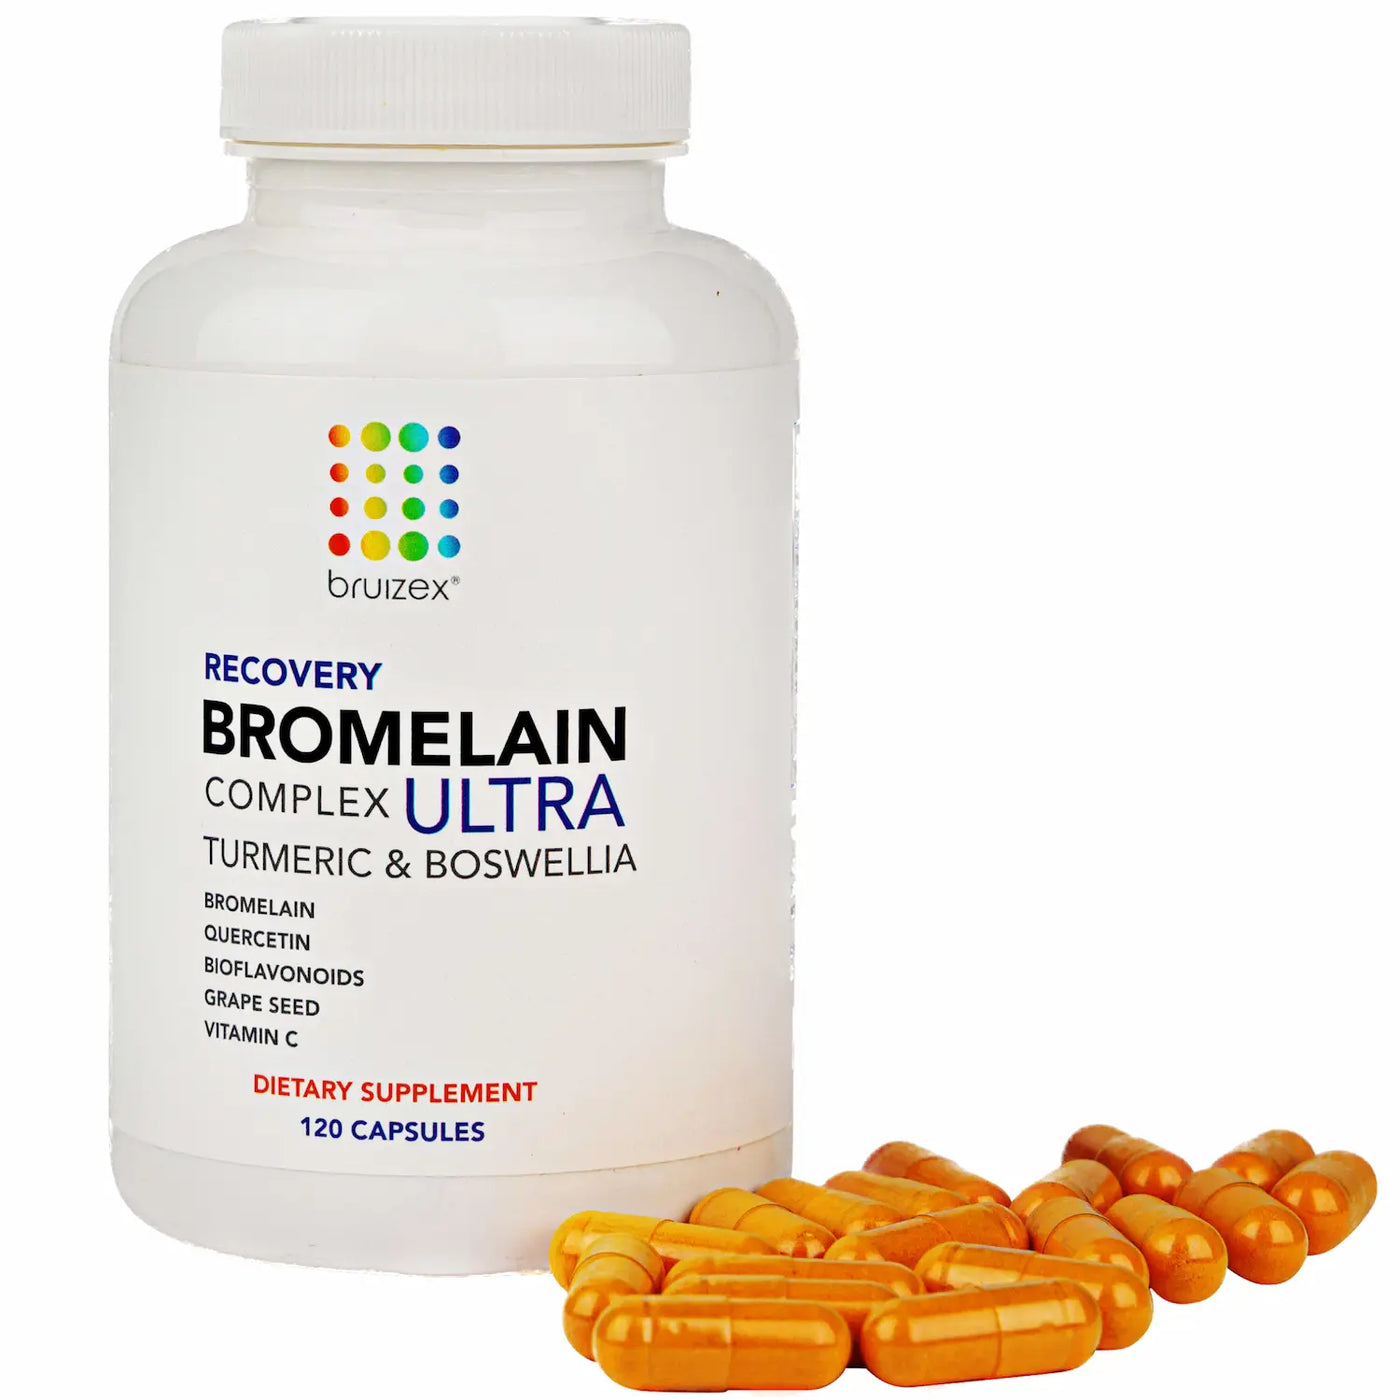 Bromelain Complex Ultra